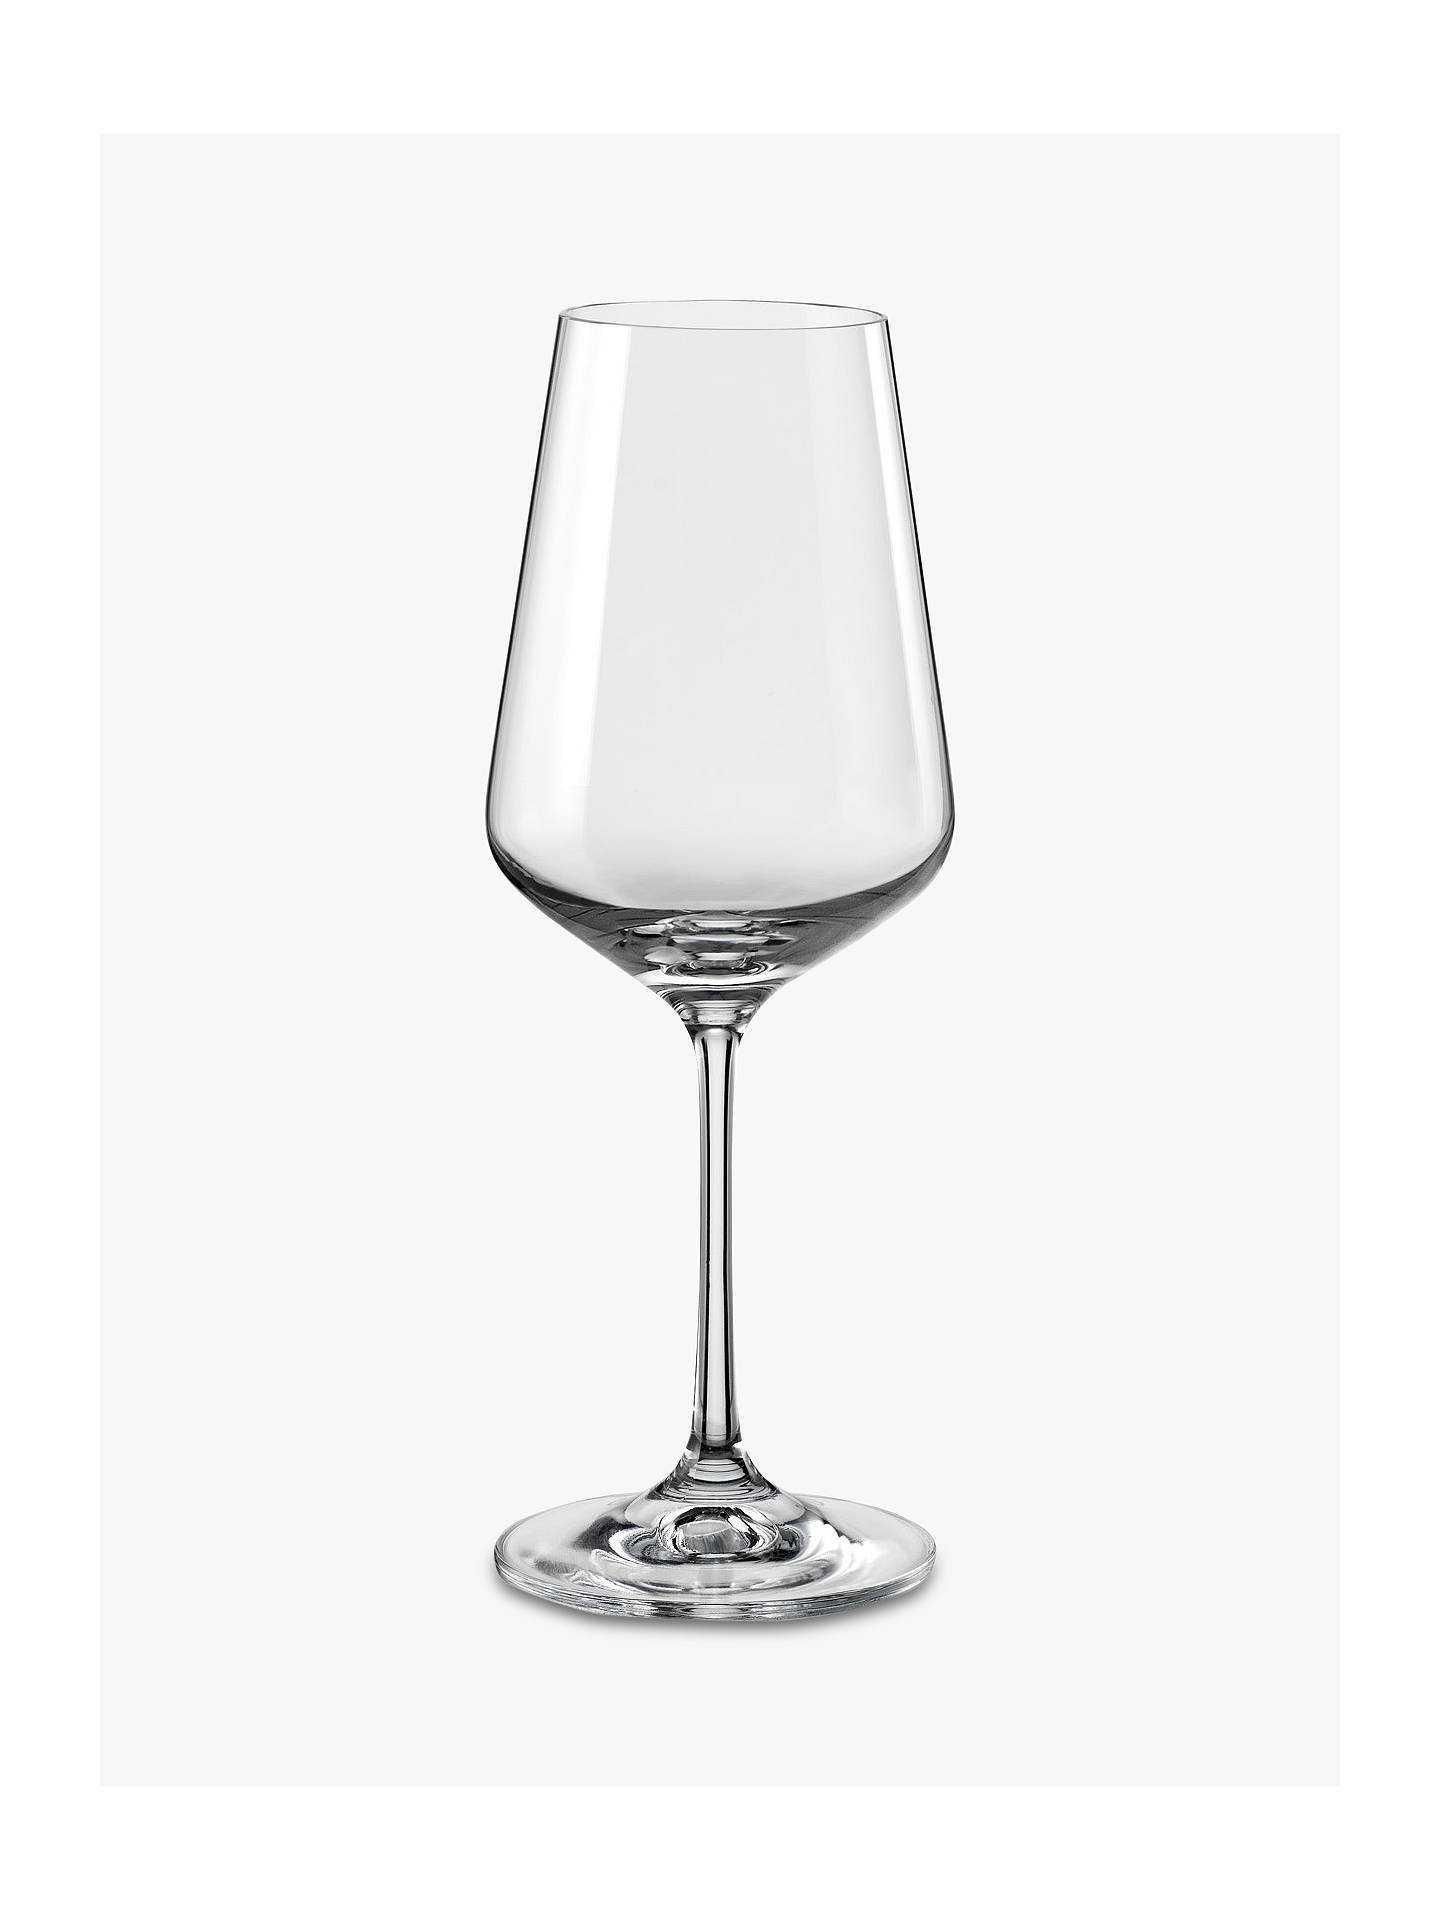 Combined RRP £125 Lot To Contain 5 Boxes Of Jasper Conran 4 Davenport Small Wine Glasses